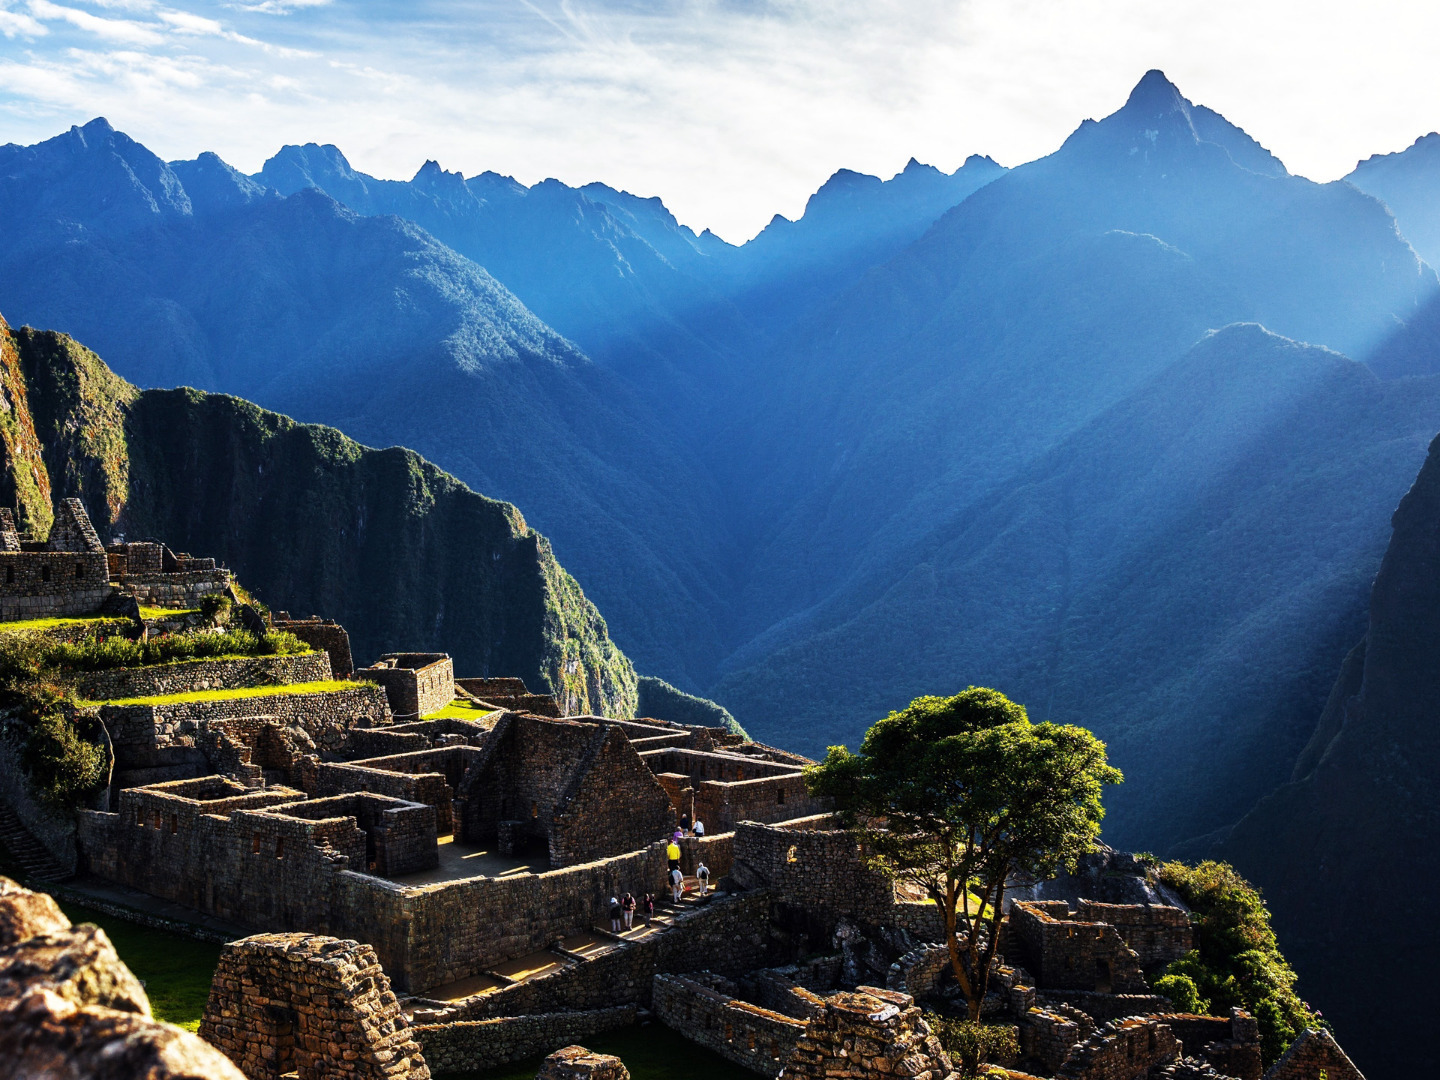 Peru - Travel in Style